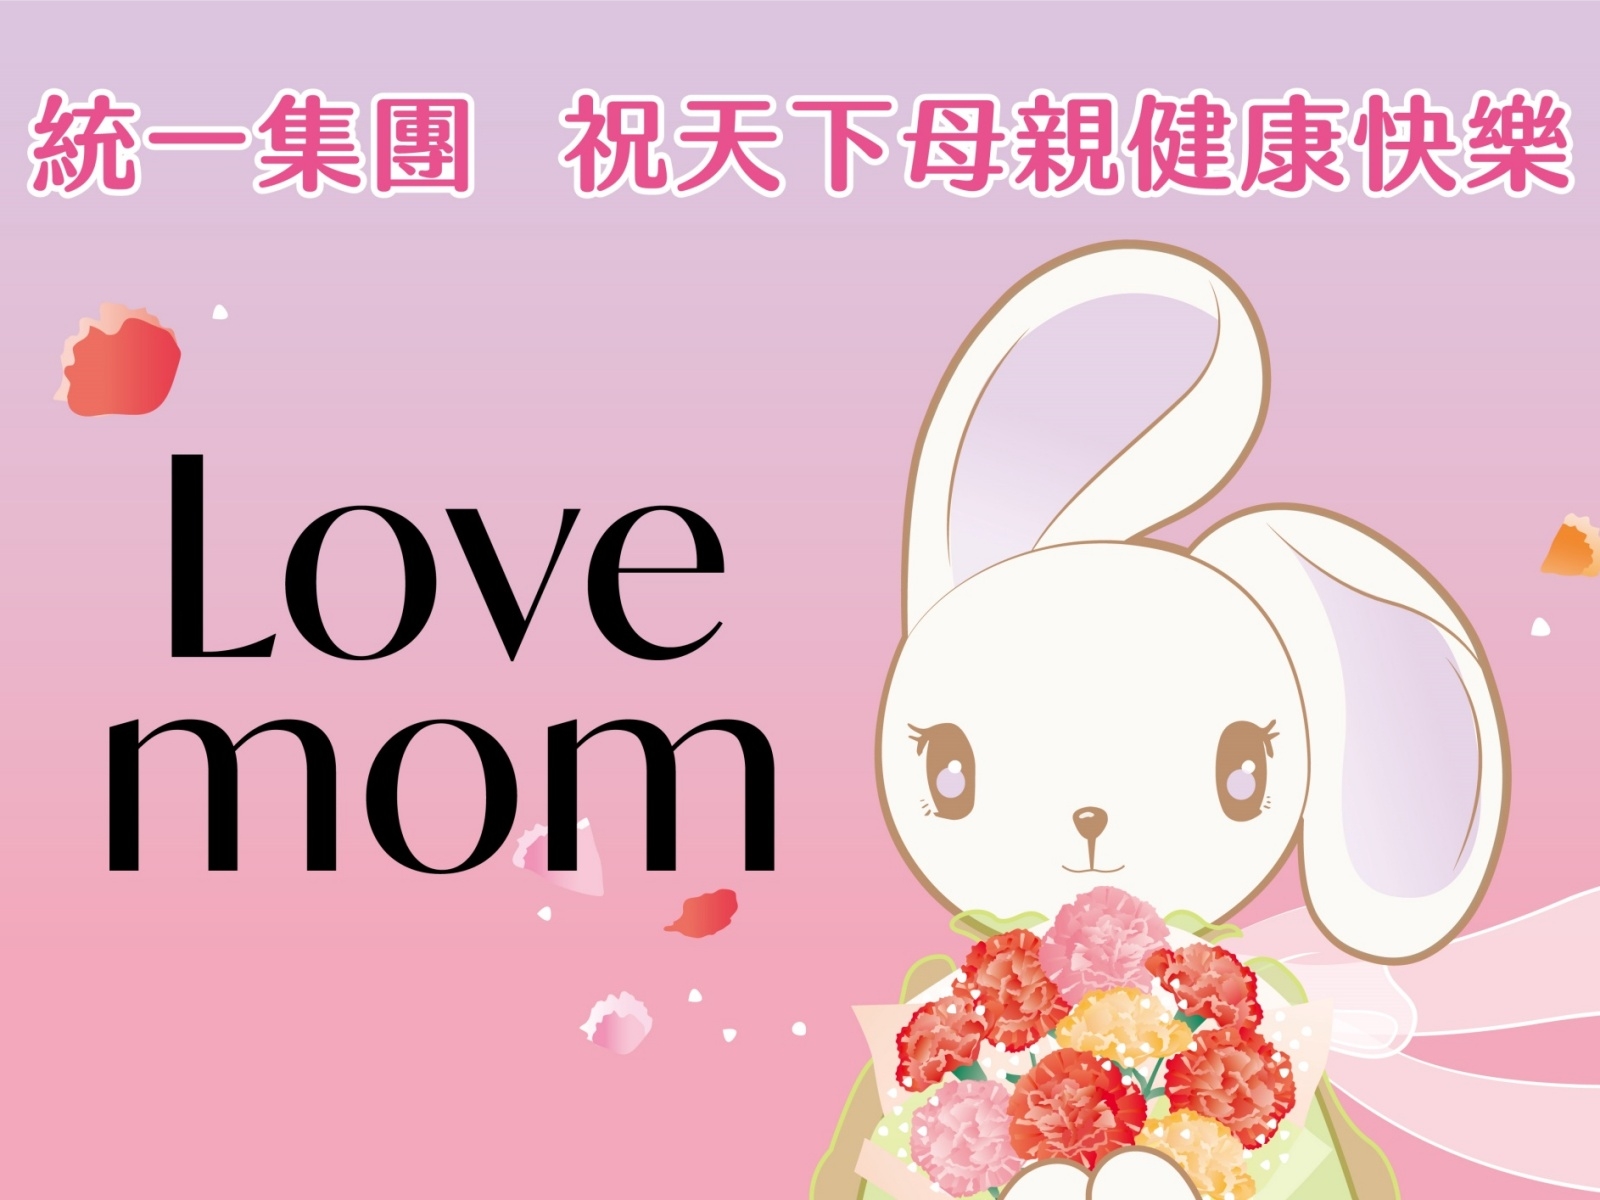 LOVE MOM！統一集團與您一起對媽媽大聲說愛